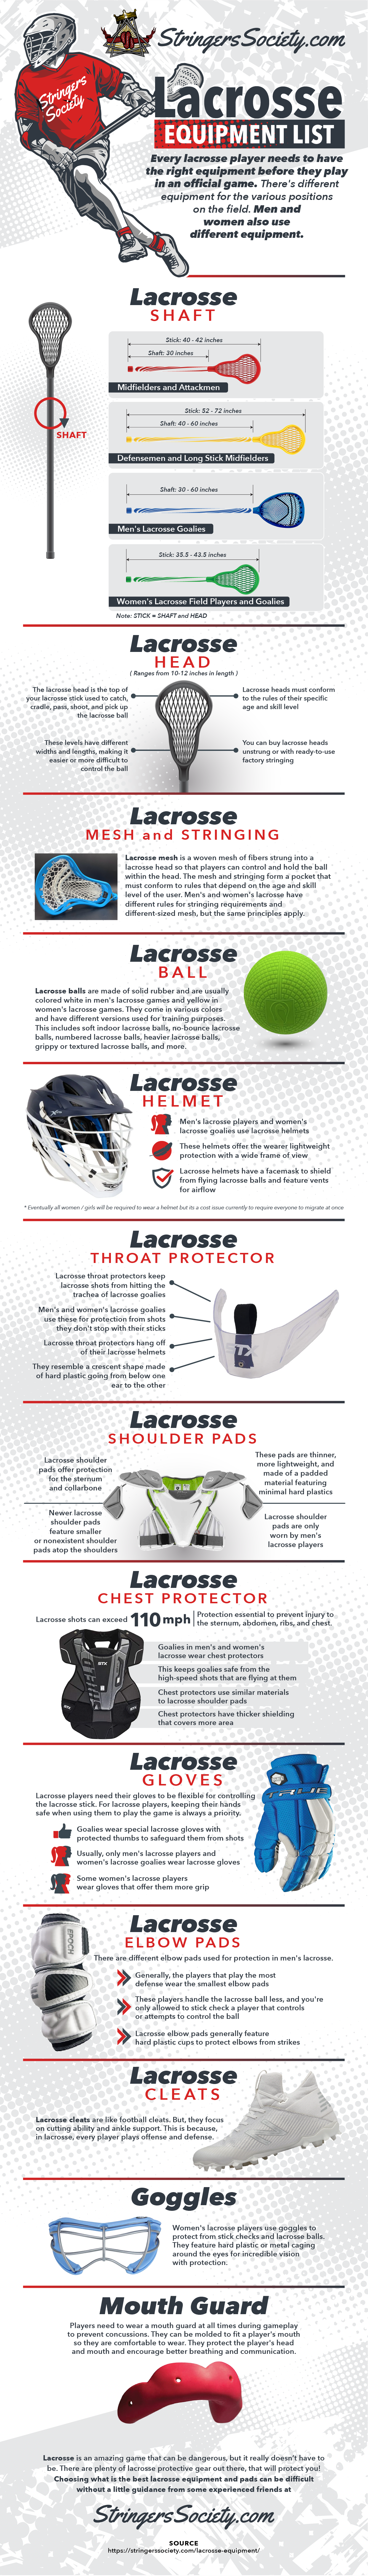 lacrosse equipment list